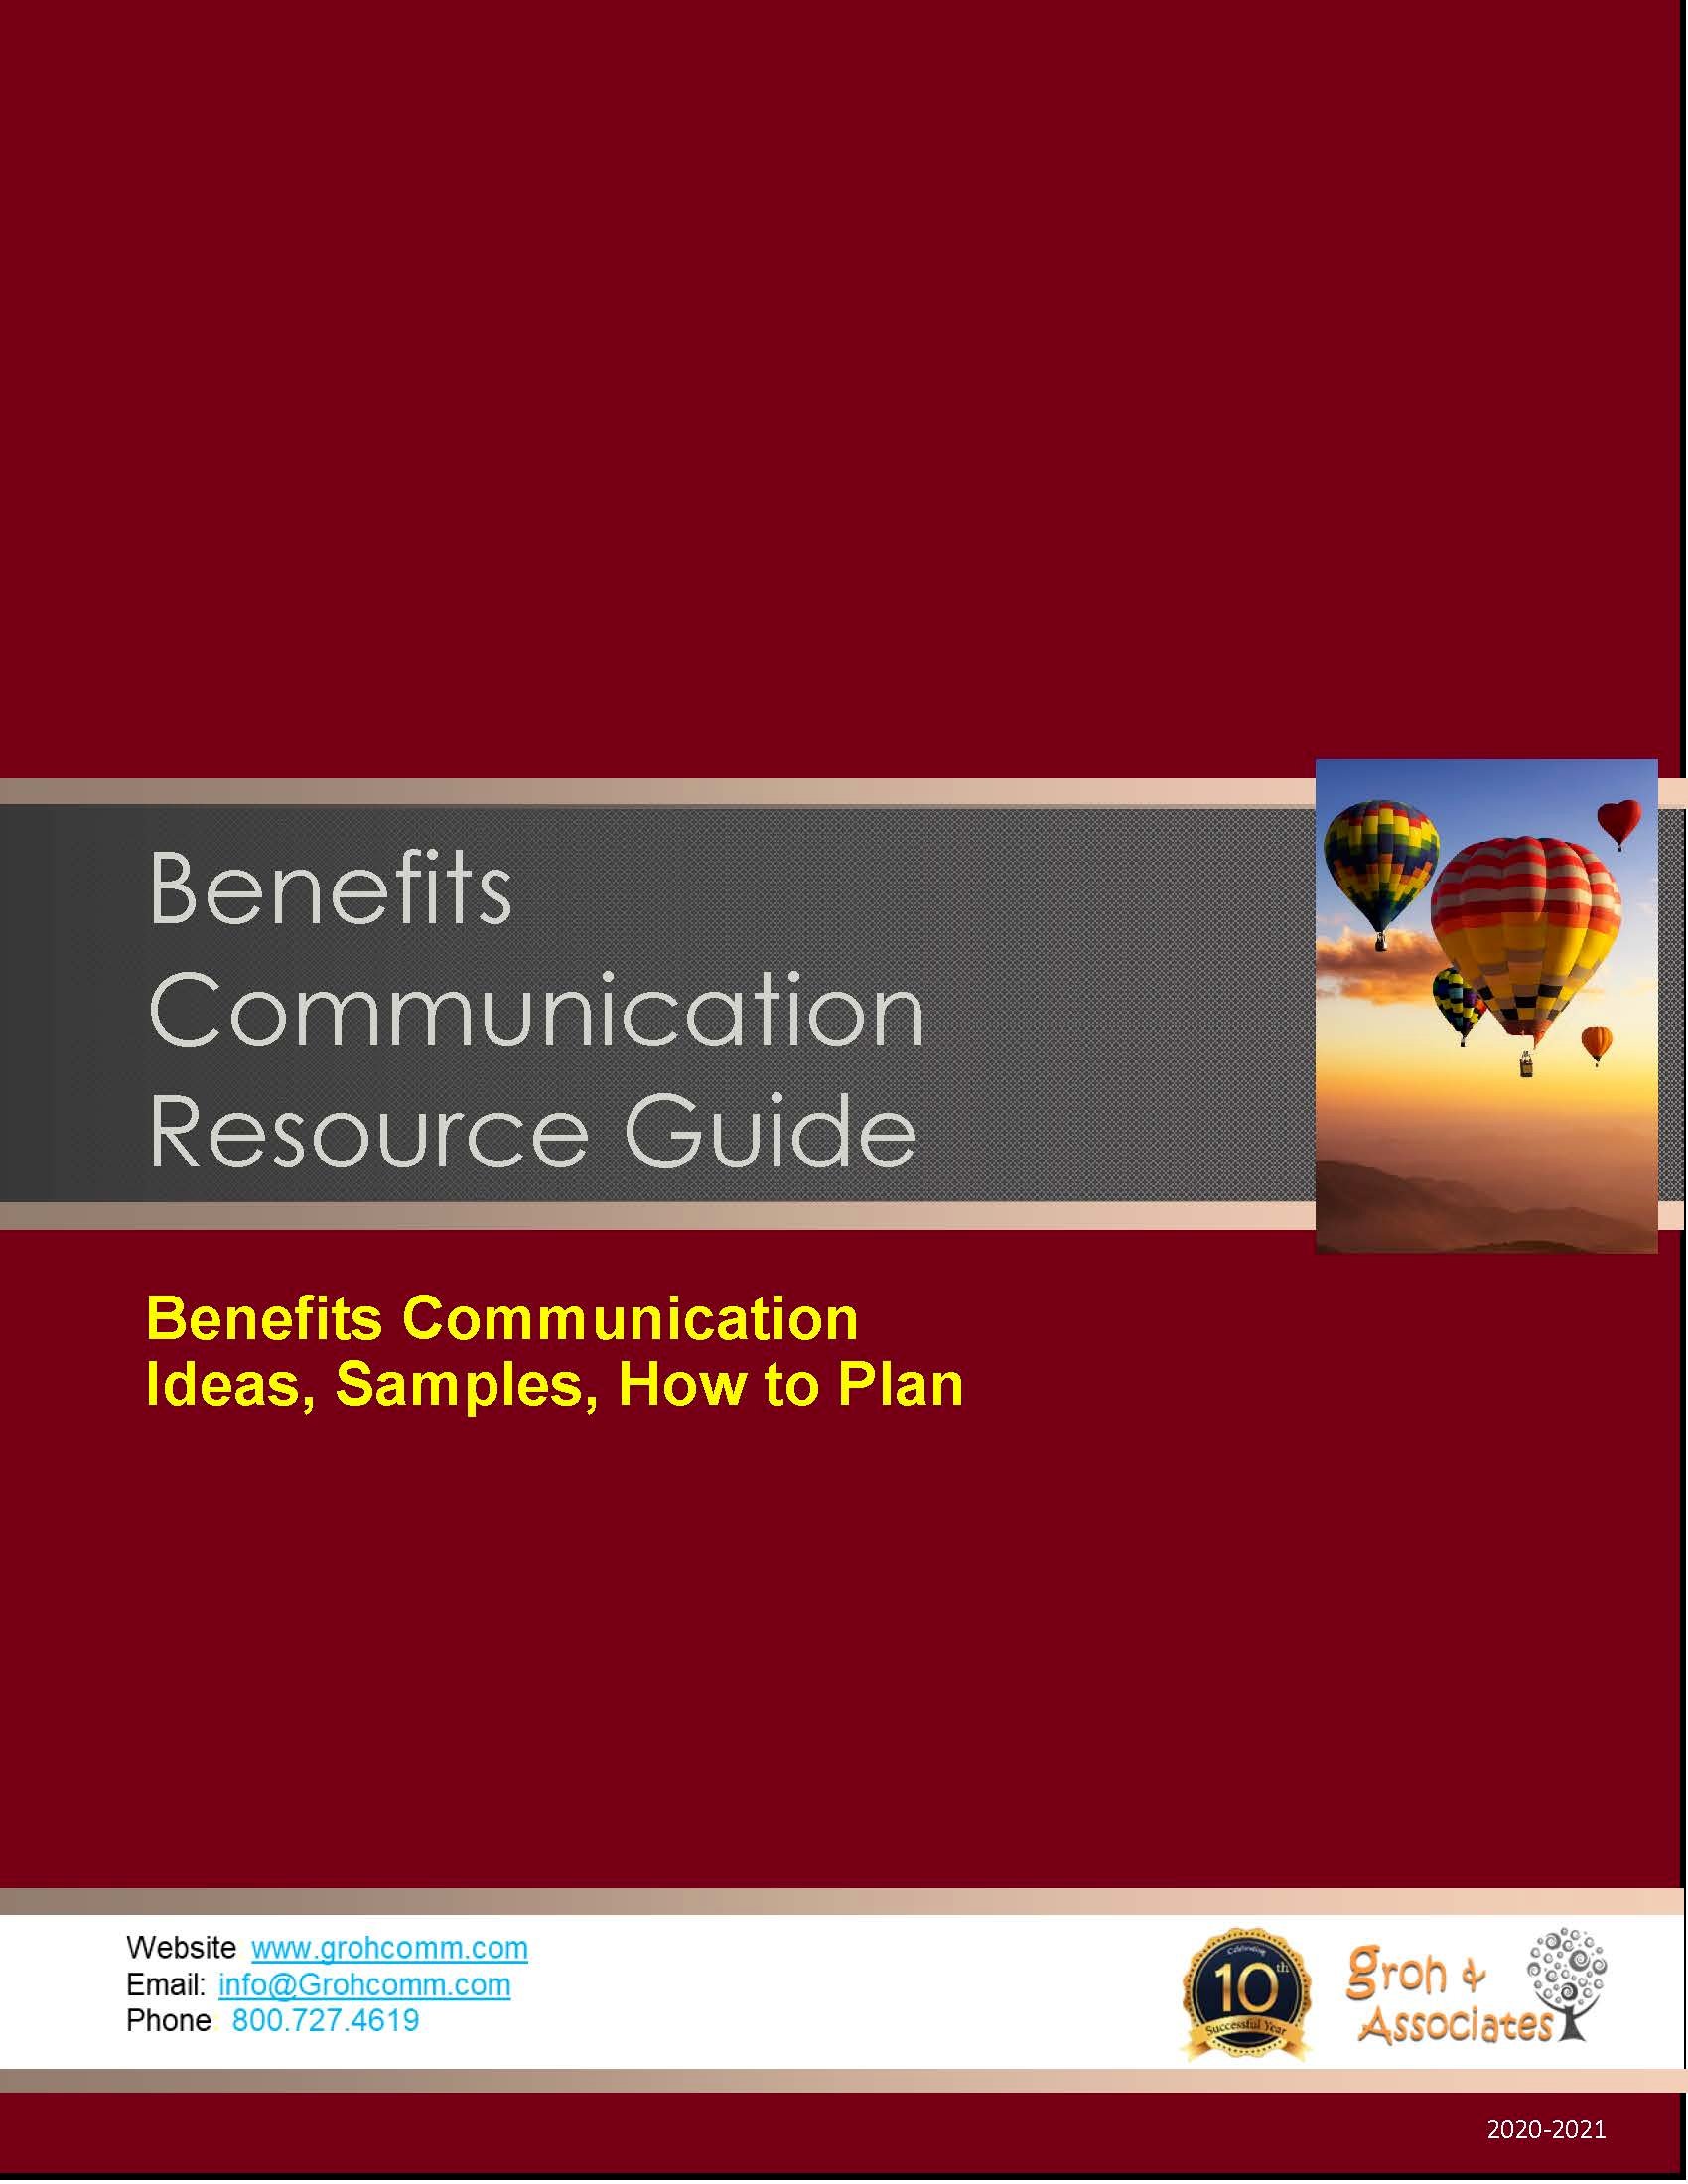 Benefits Communication Resource Guides